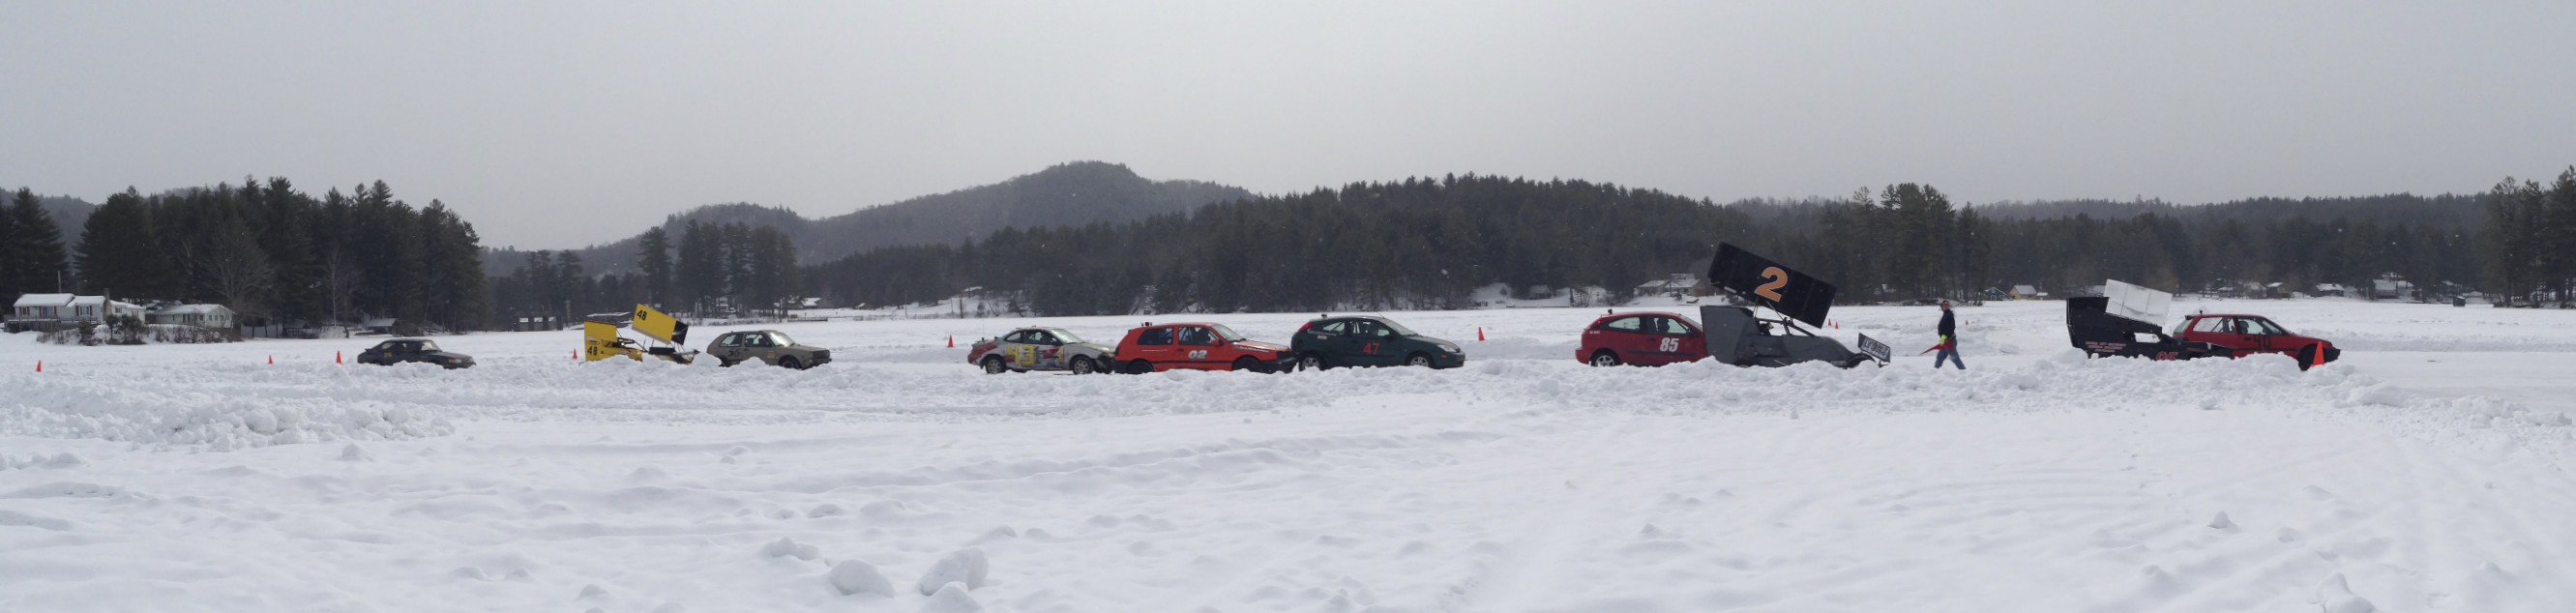 Racing action on the lake.